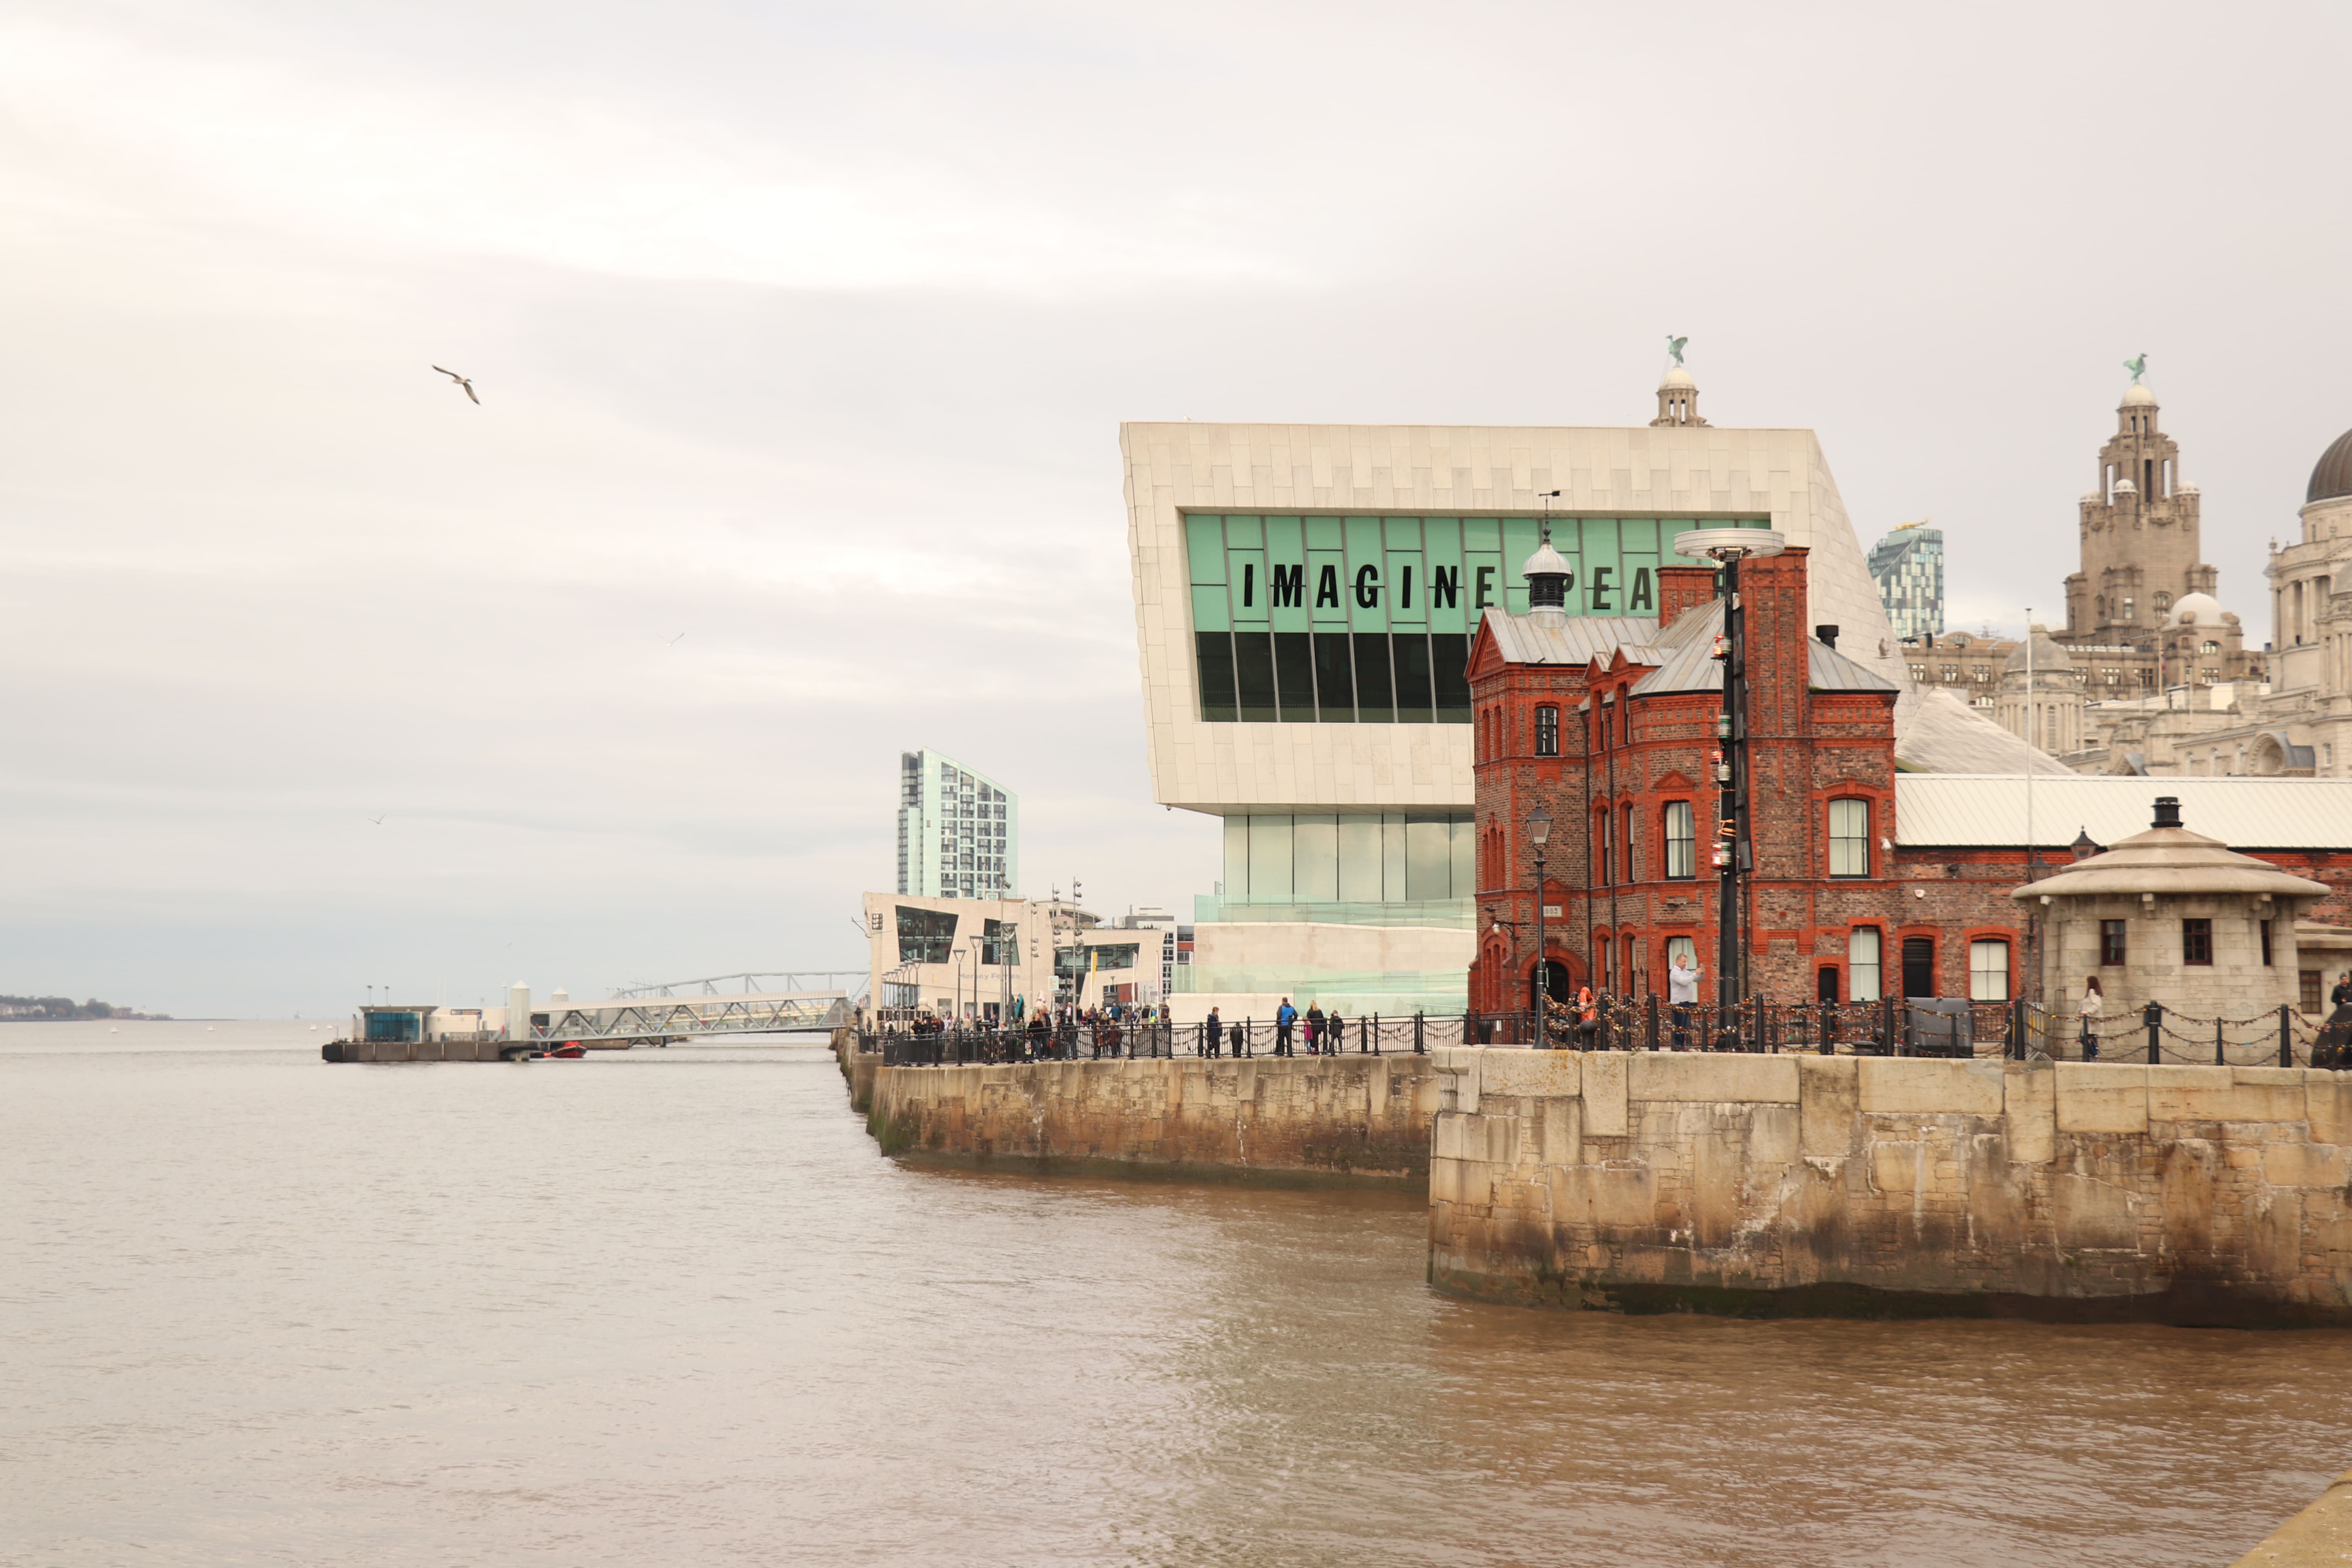 The Liverpool docks